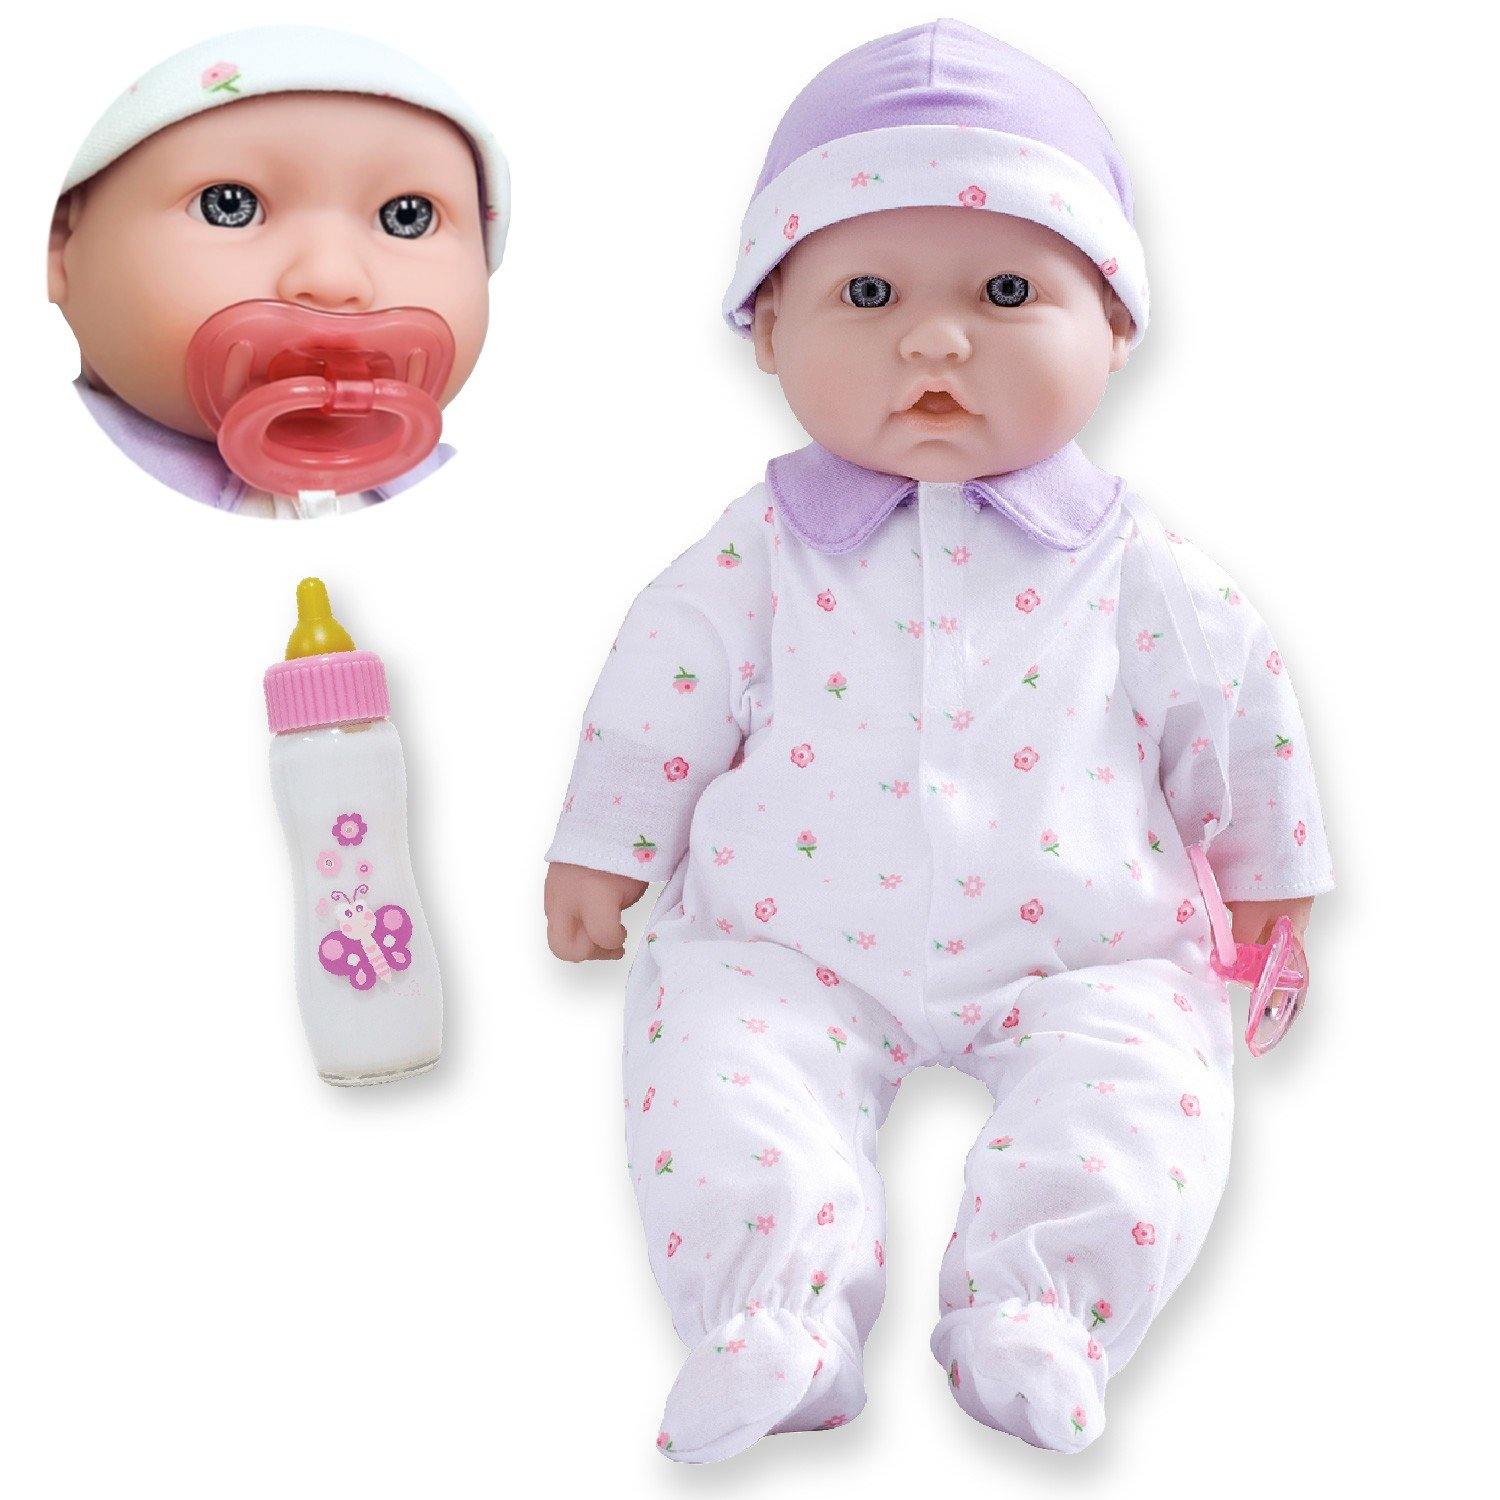 JC Toys Caucasian 16-inch Medium Soft Body Baby Doll